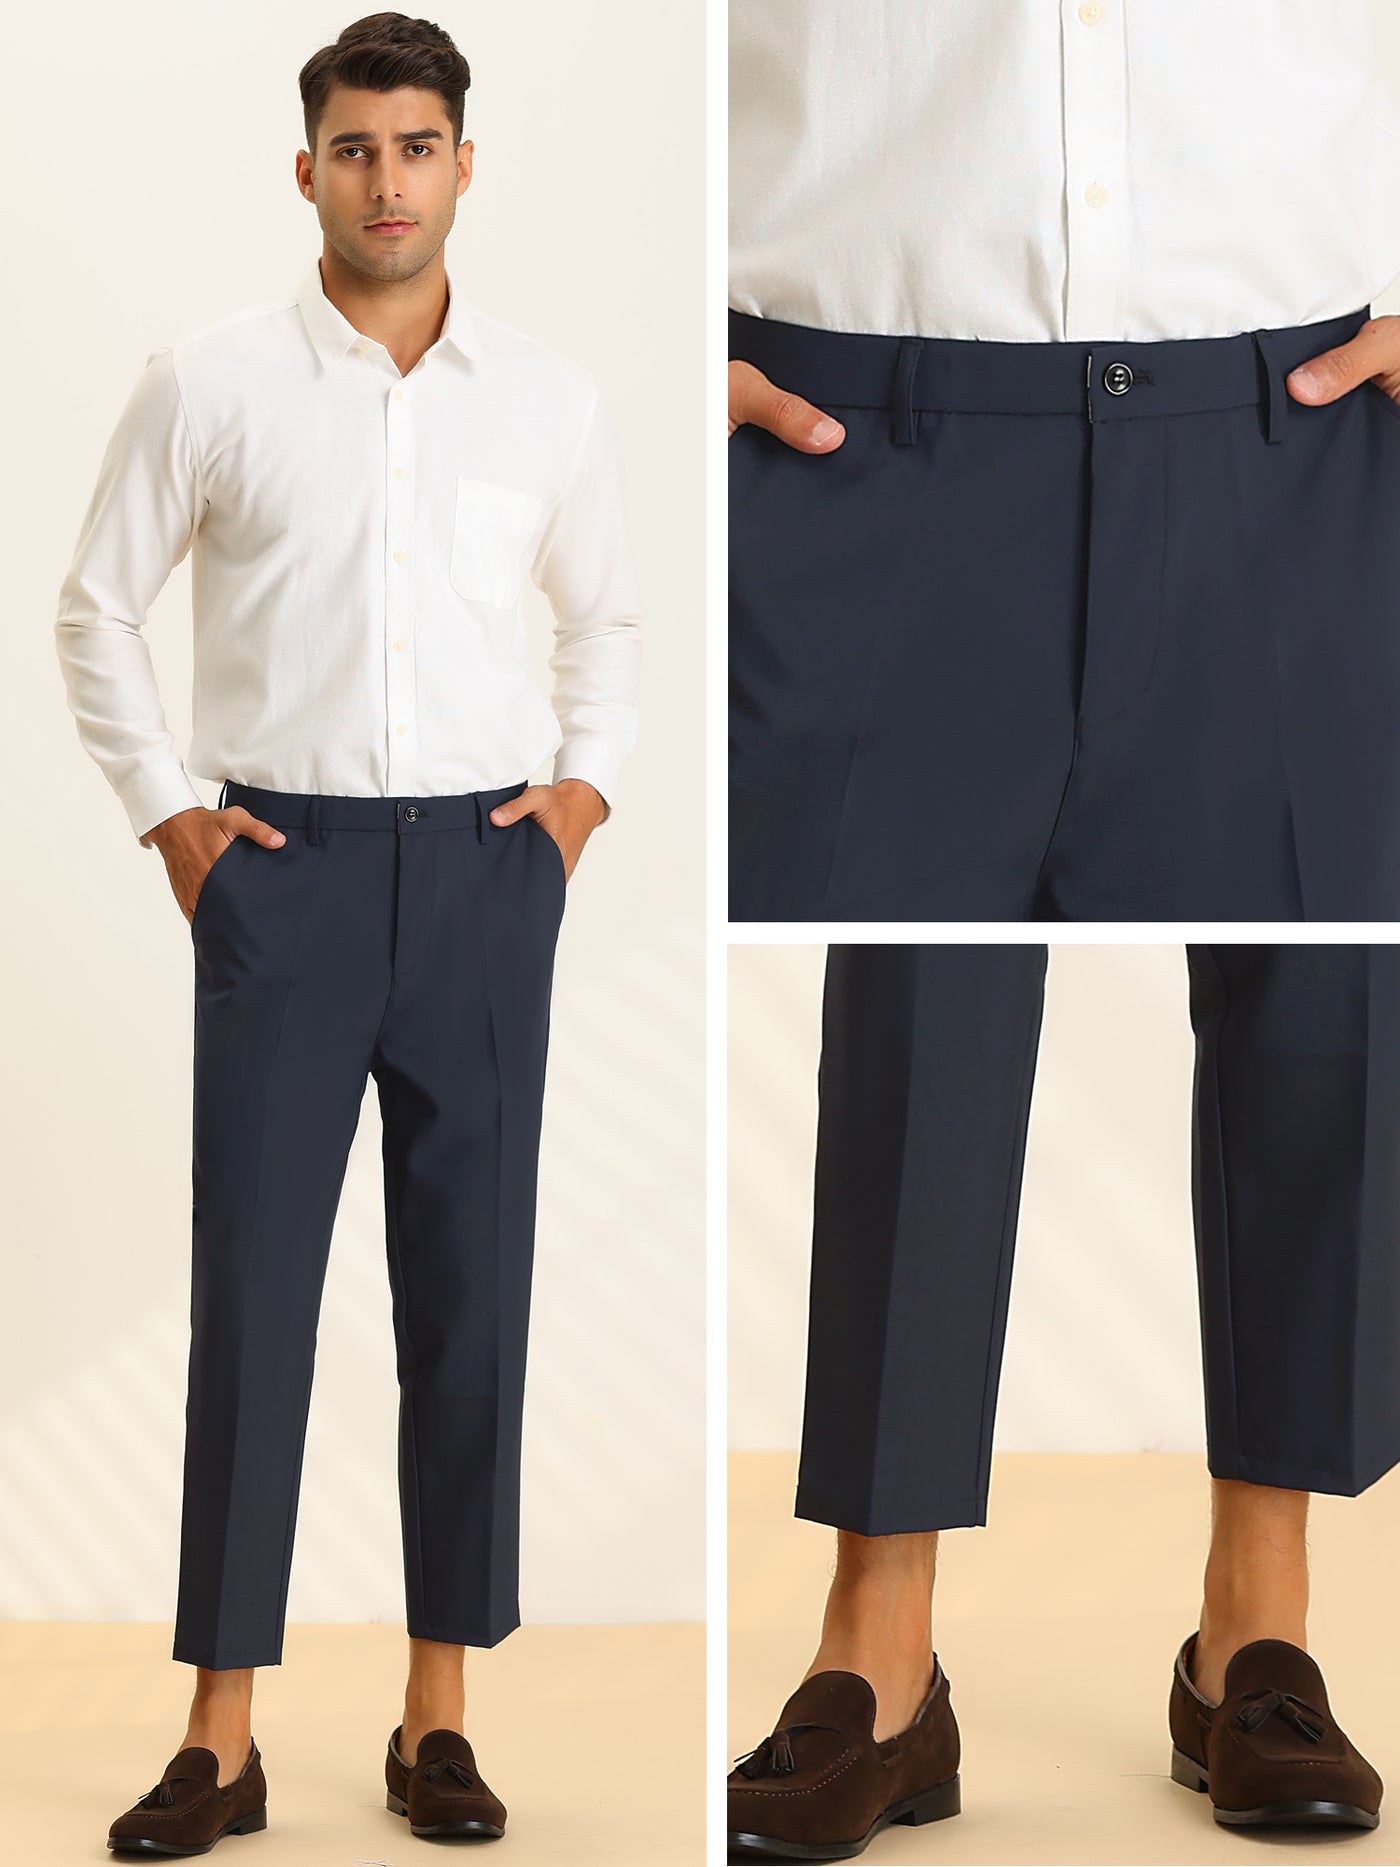 Bublédon Ankle Length Business Slim Fit Flat Front Work Cropped Dress Pants